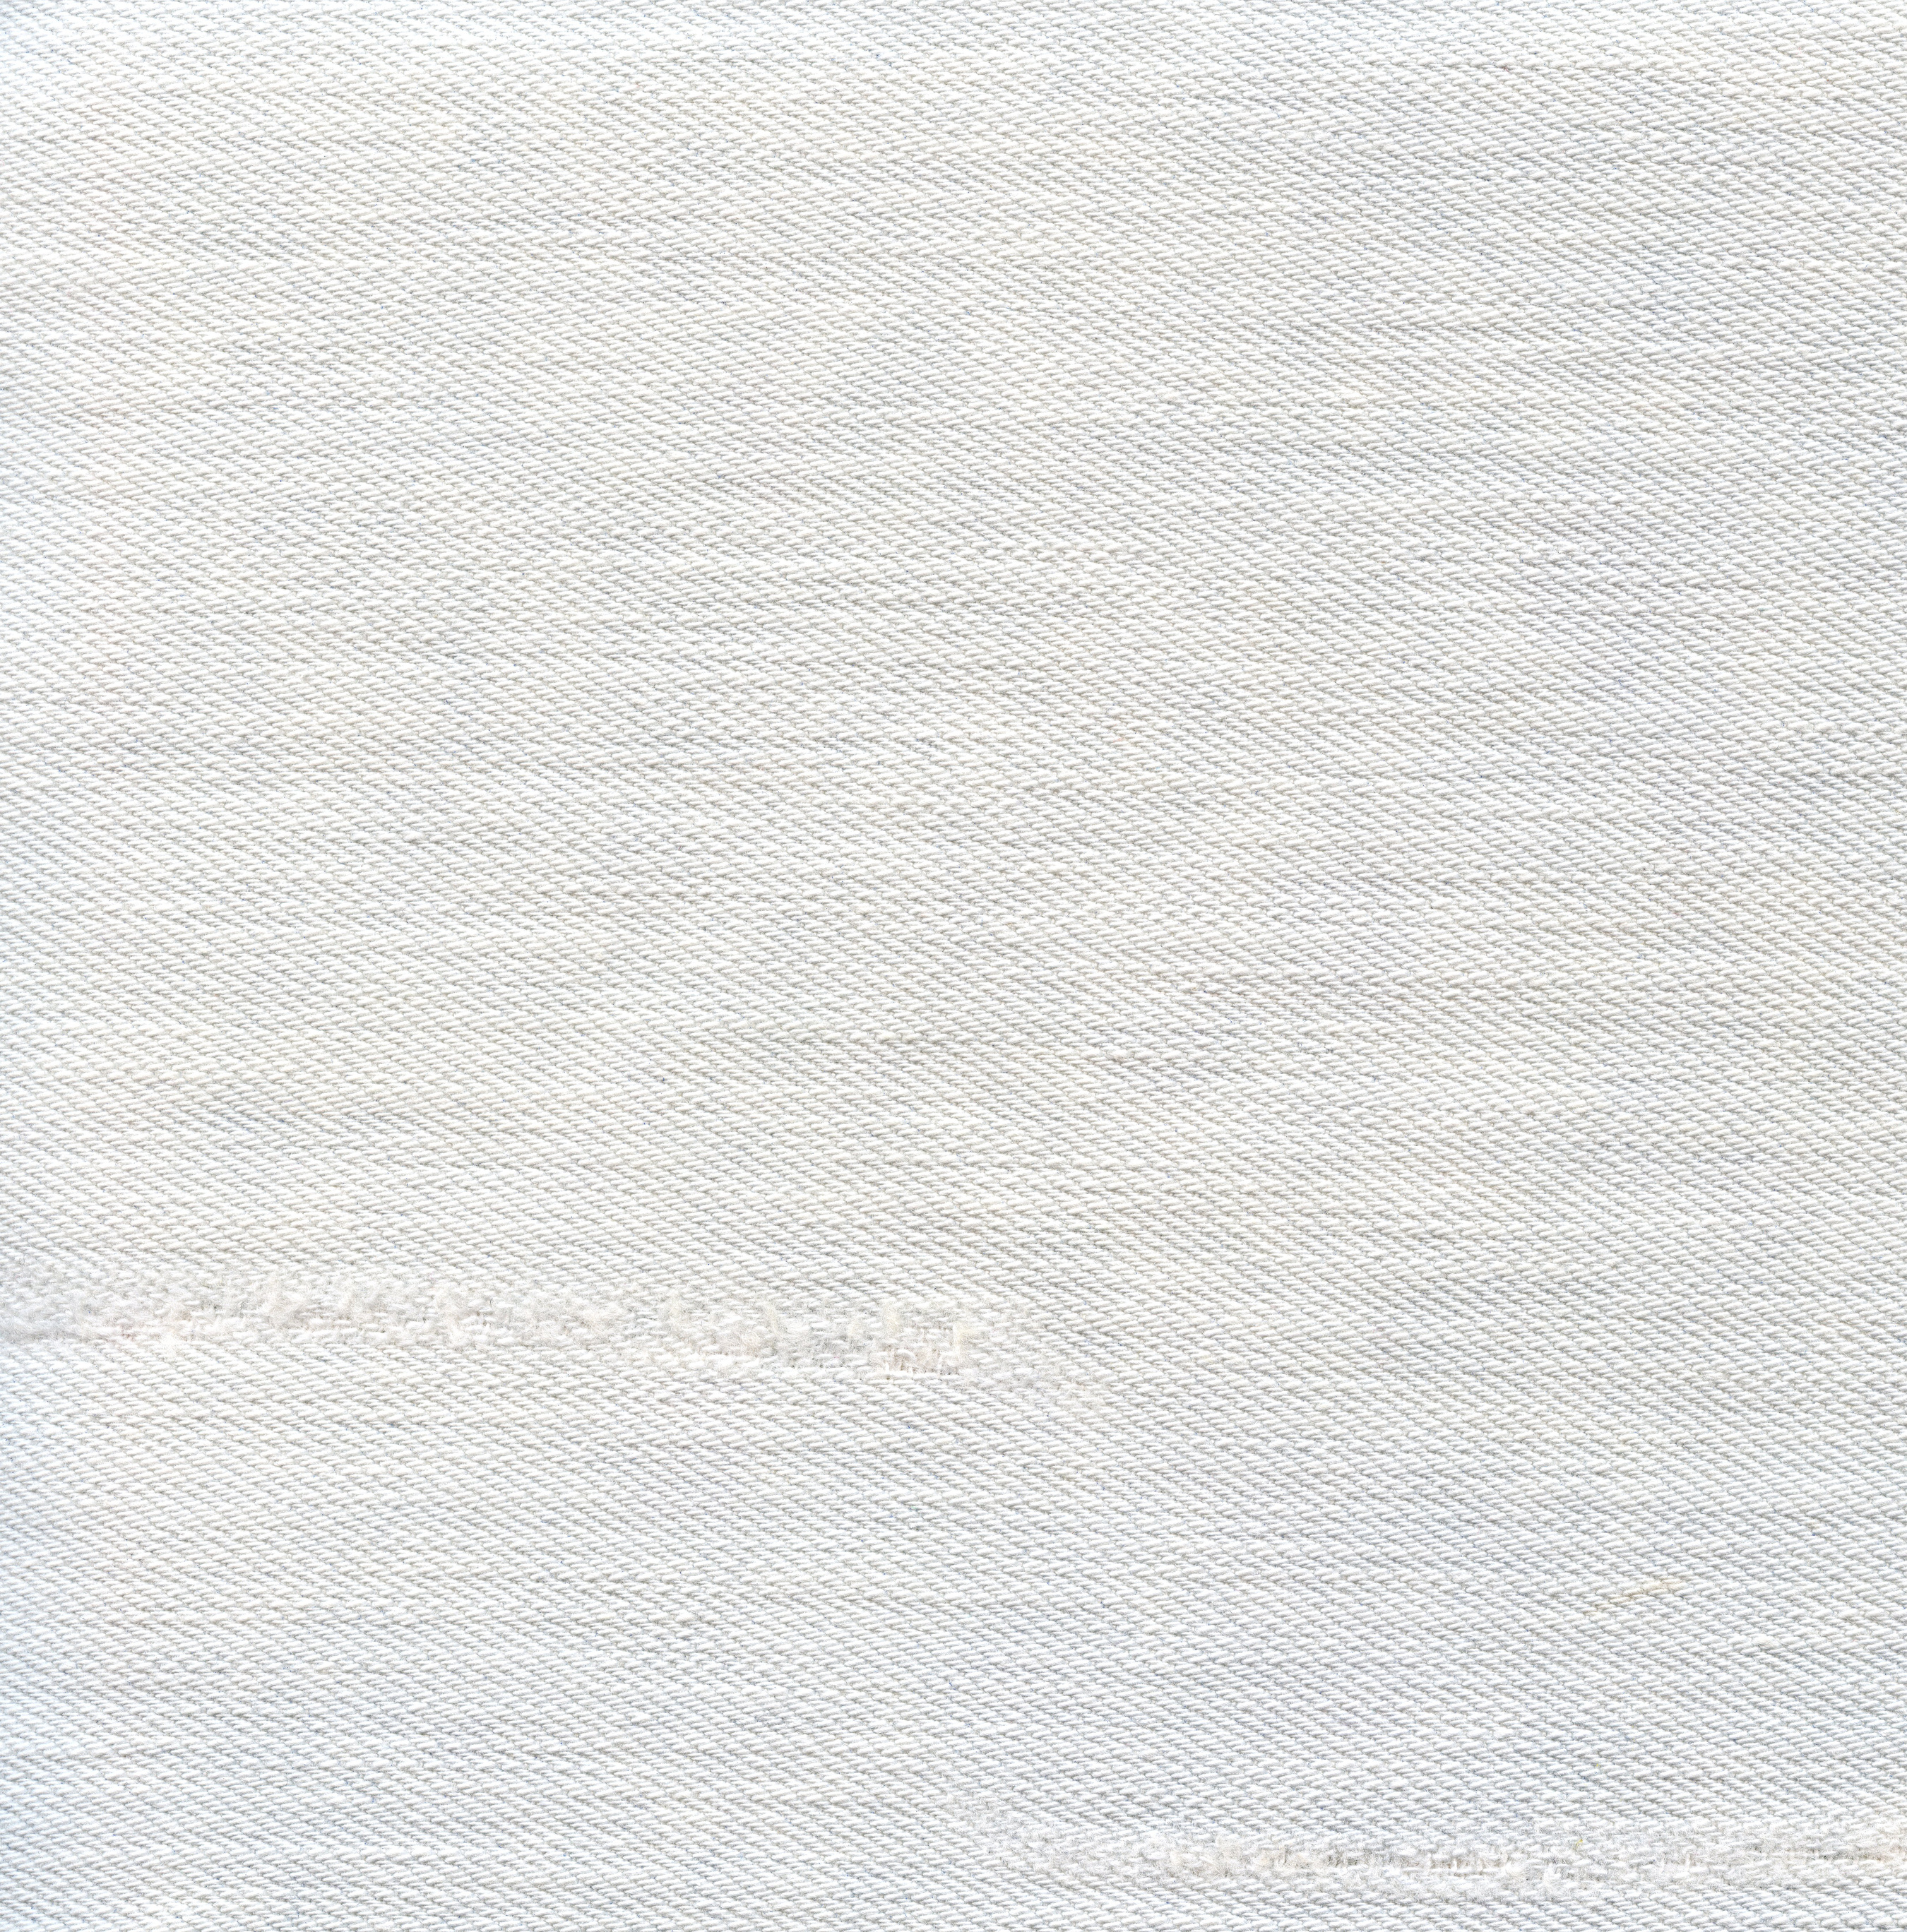 Light Jeans Texture Background. White Color Canvas